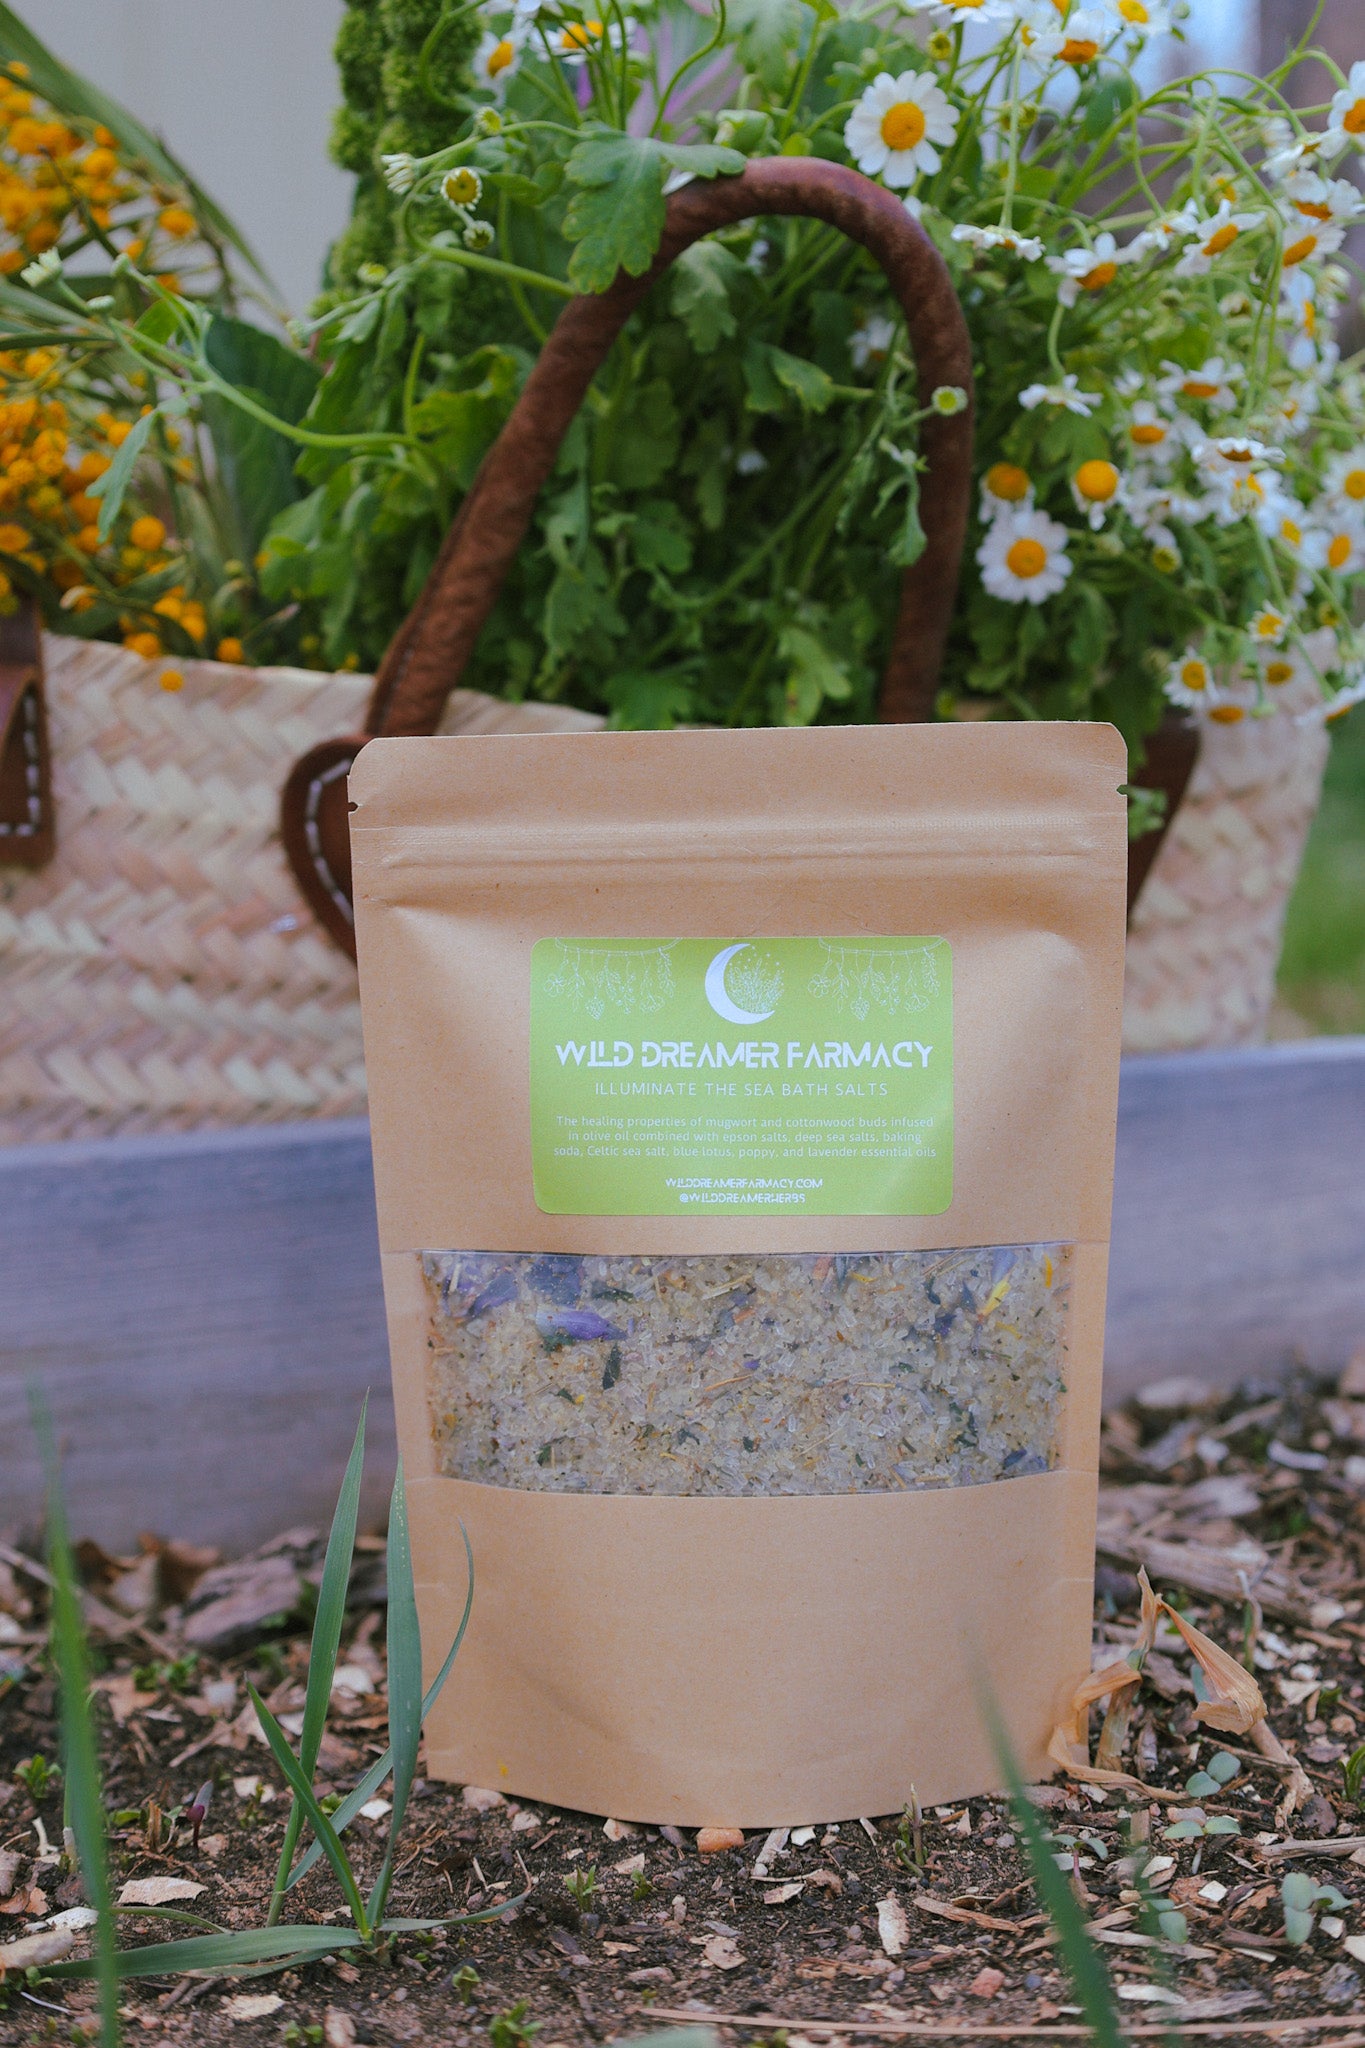 Wood Element Seasonal Herbal Wellness Box